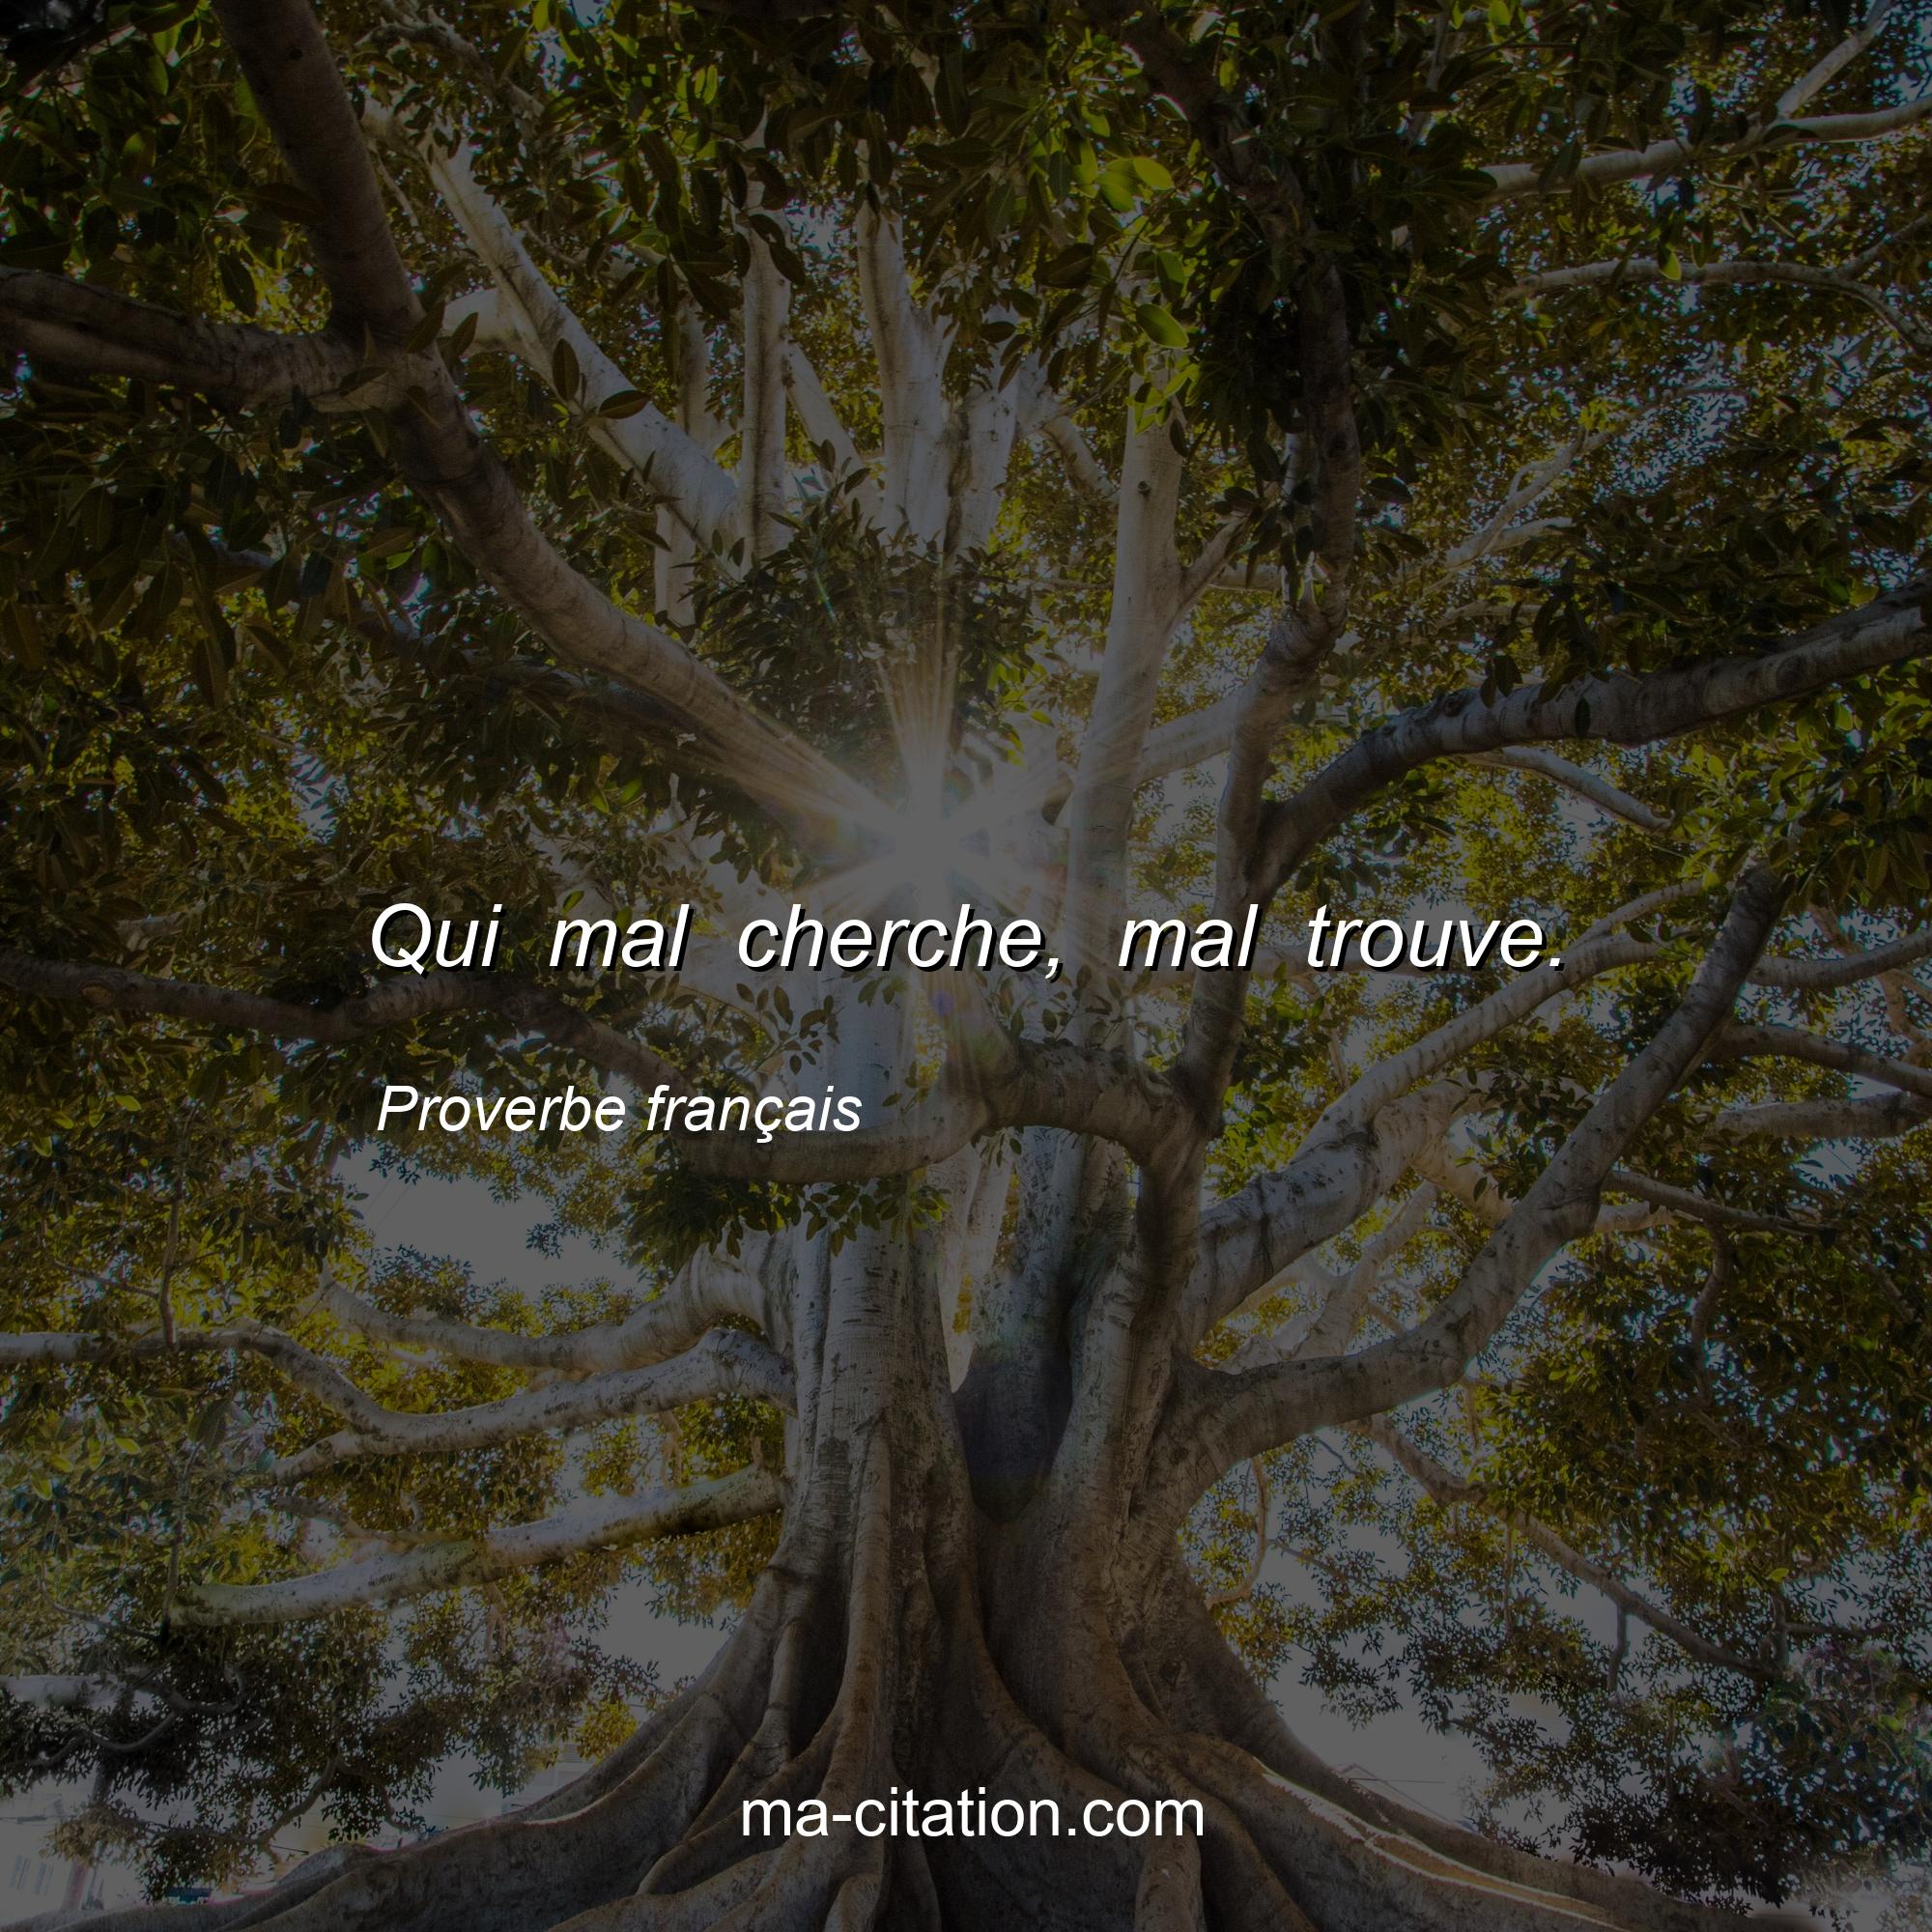 Proverbe français : Qui mal cherche, mal trouve.